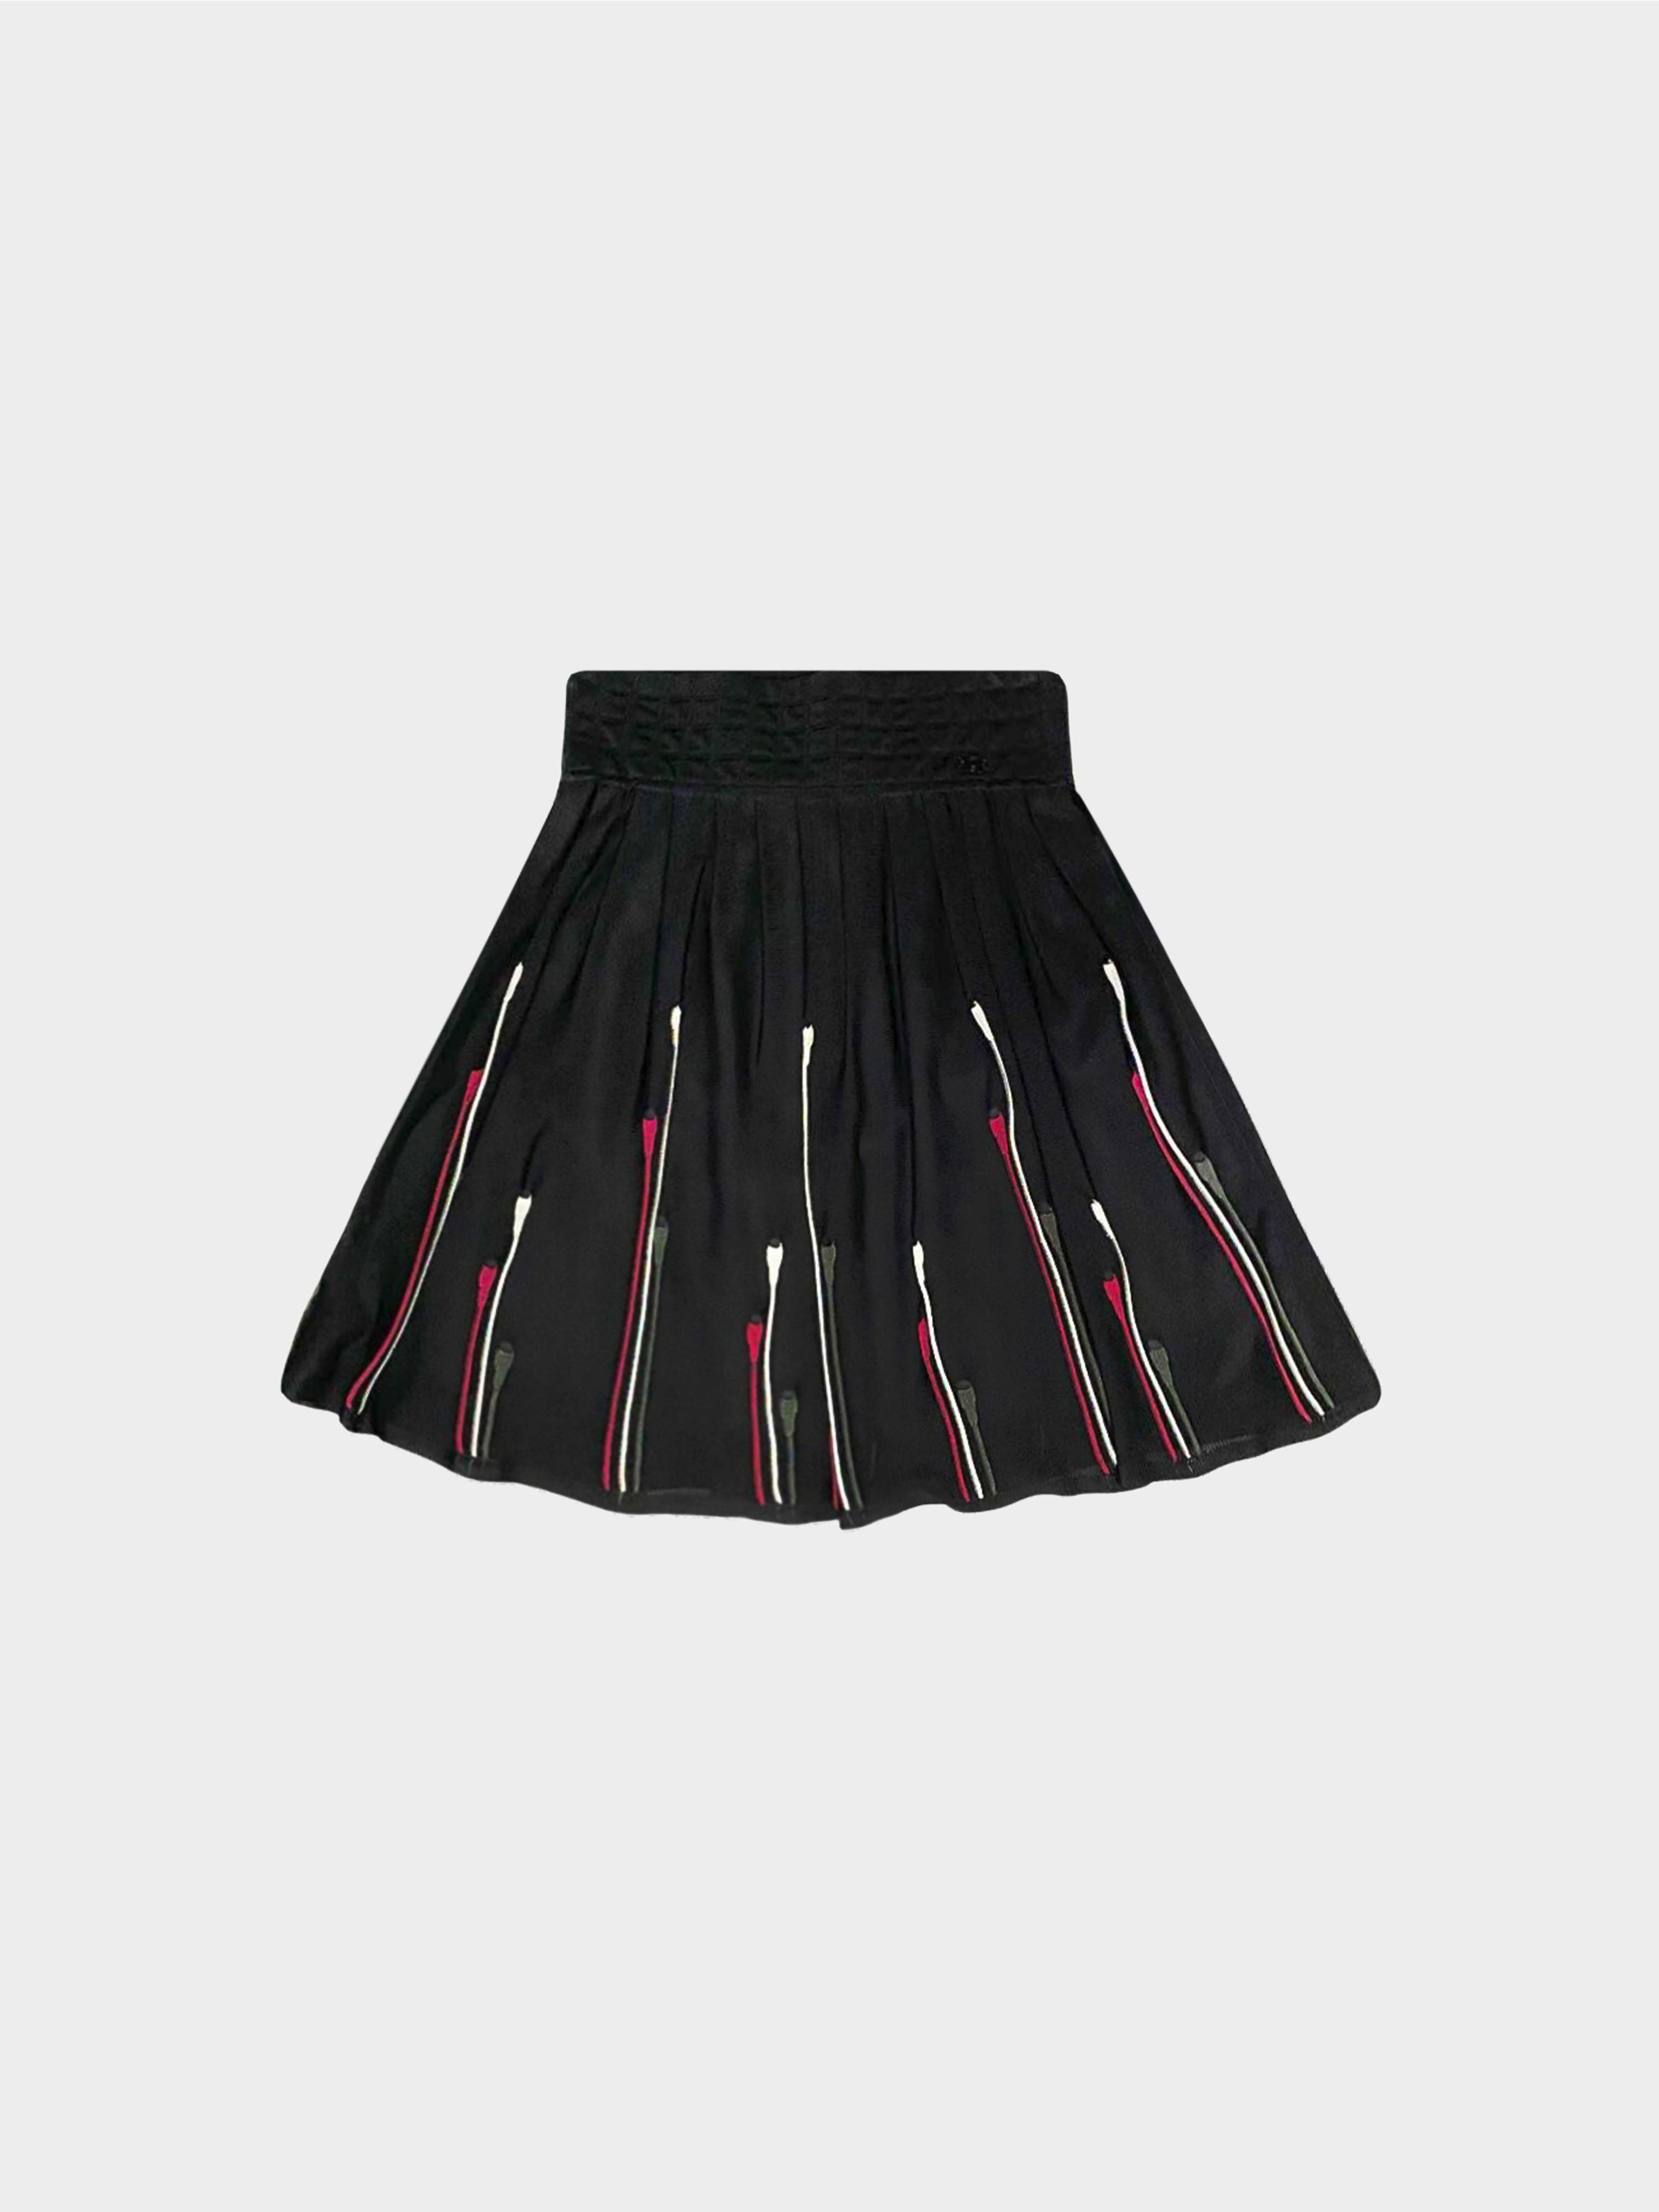 Chanel Spring 2004 Black Flare Mini Skirt · INTO